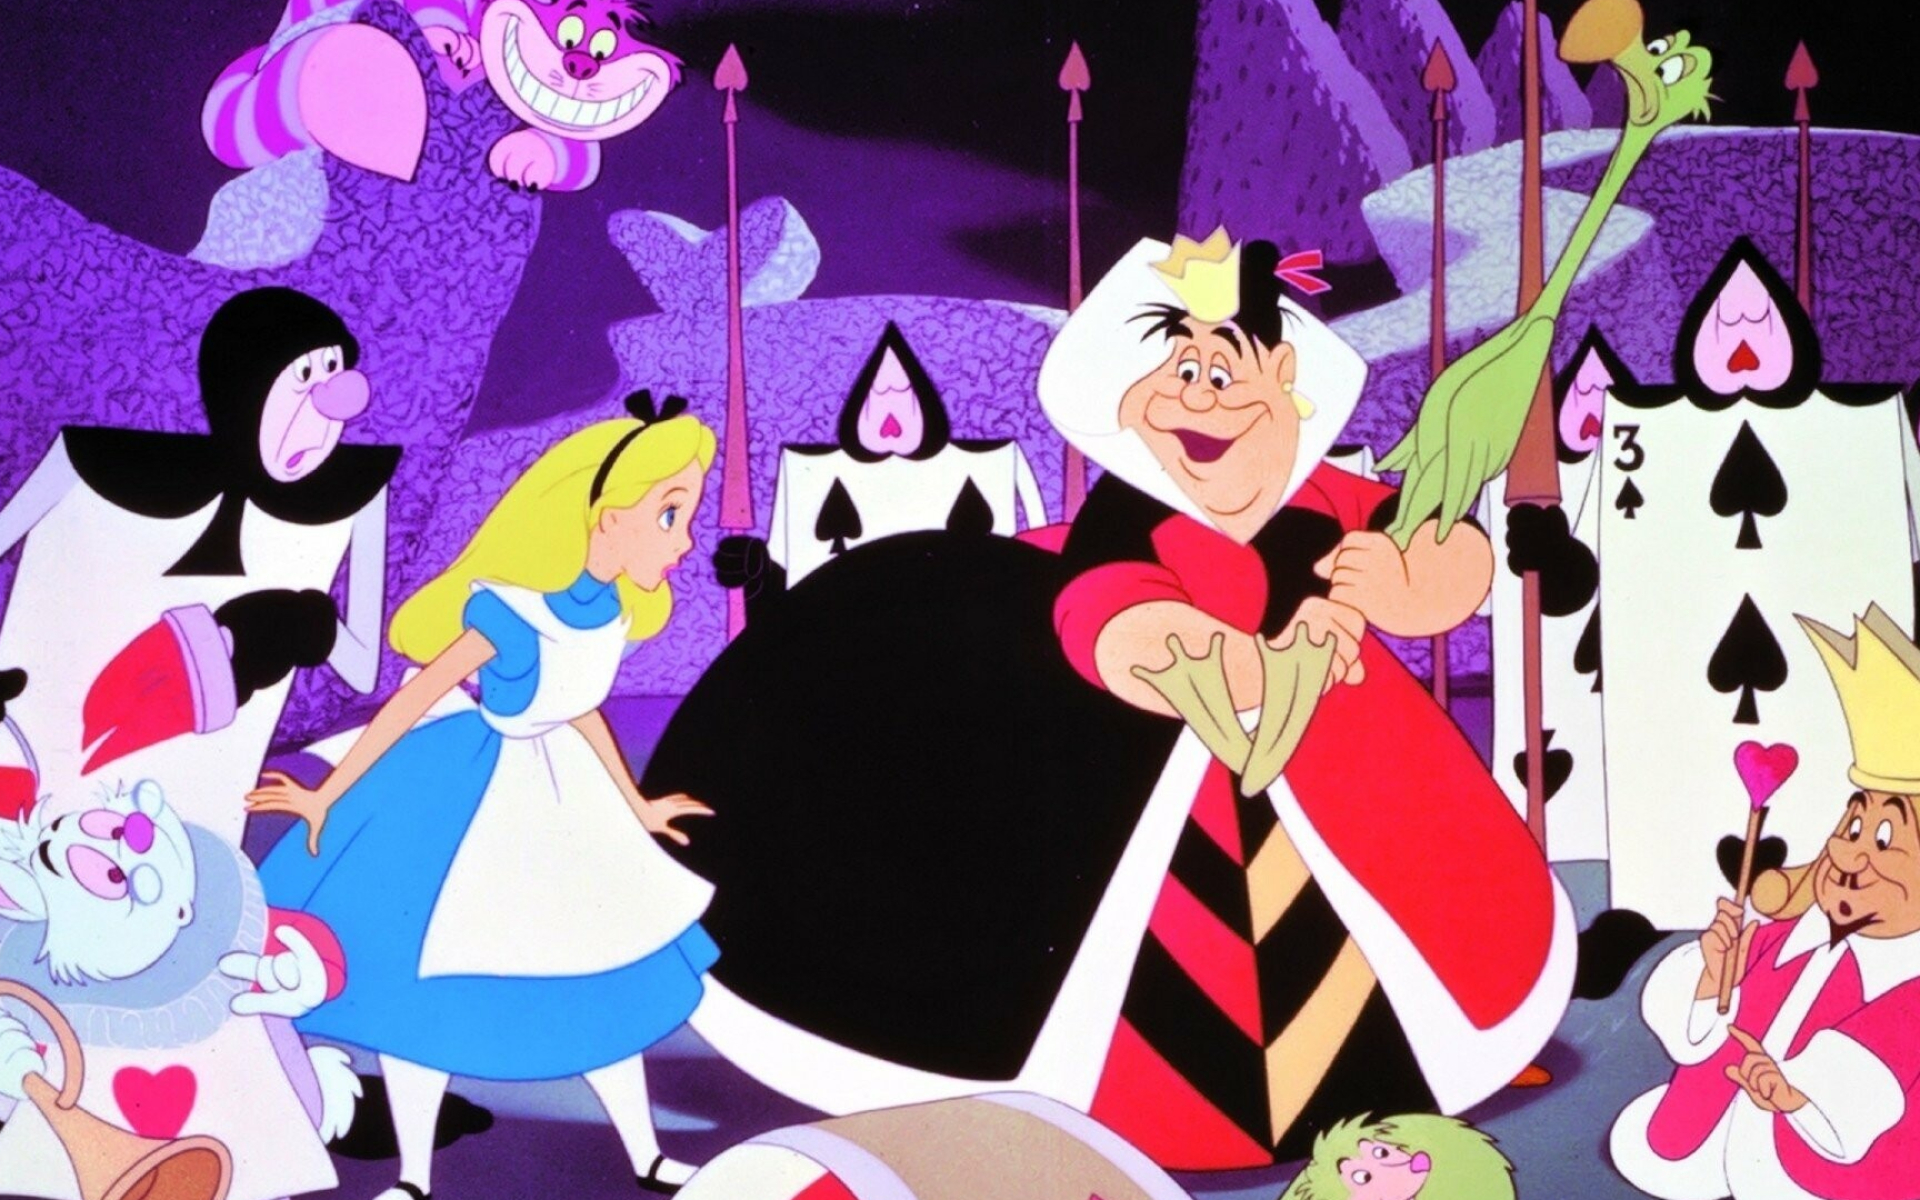 Alice In Wonderland (Cartoon): A 1951 British-American animated musical fantasy film, Queen of Hearts. 1920x1200 HD Wallpaper.